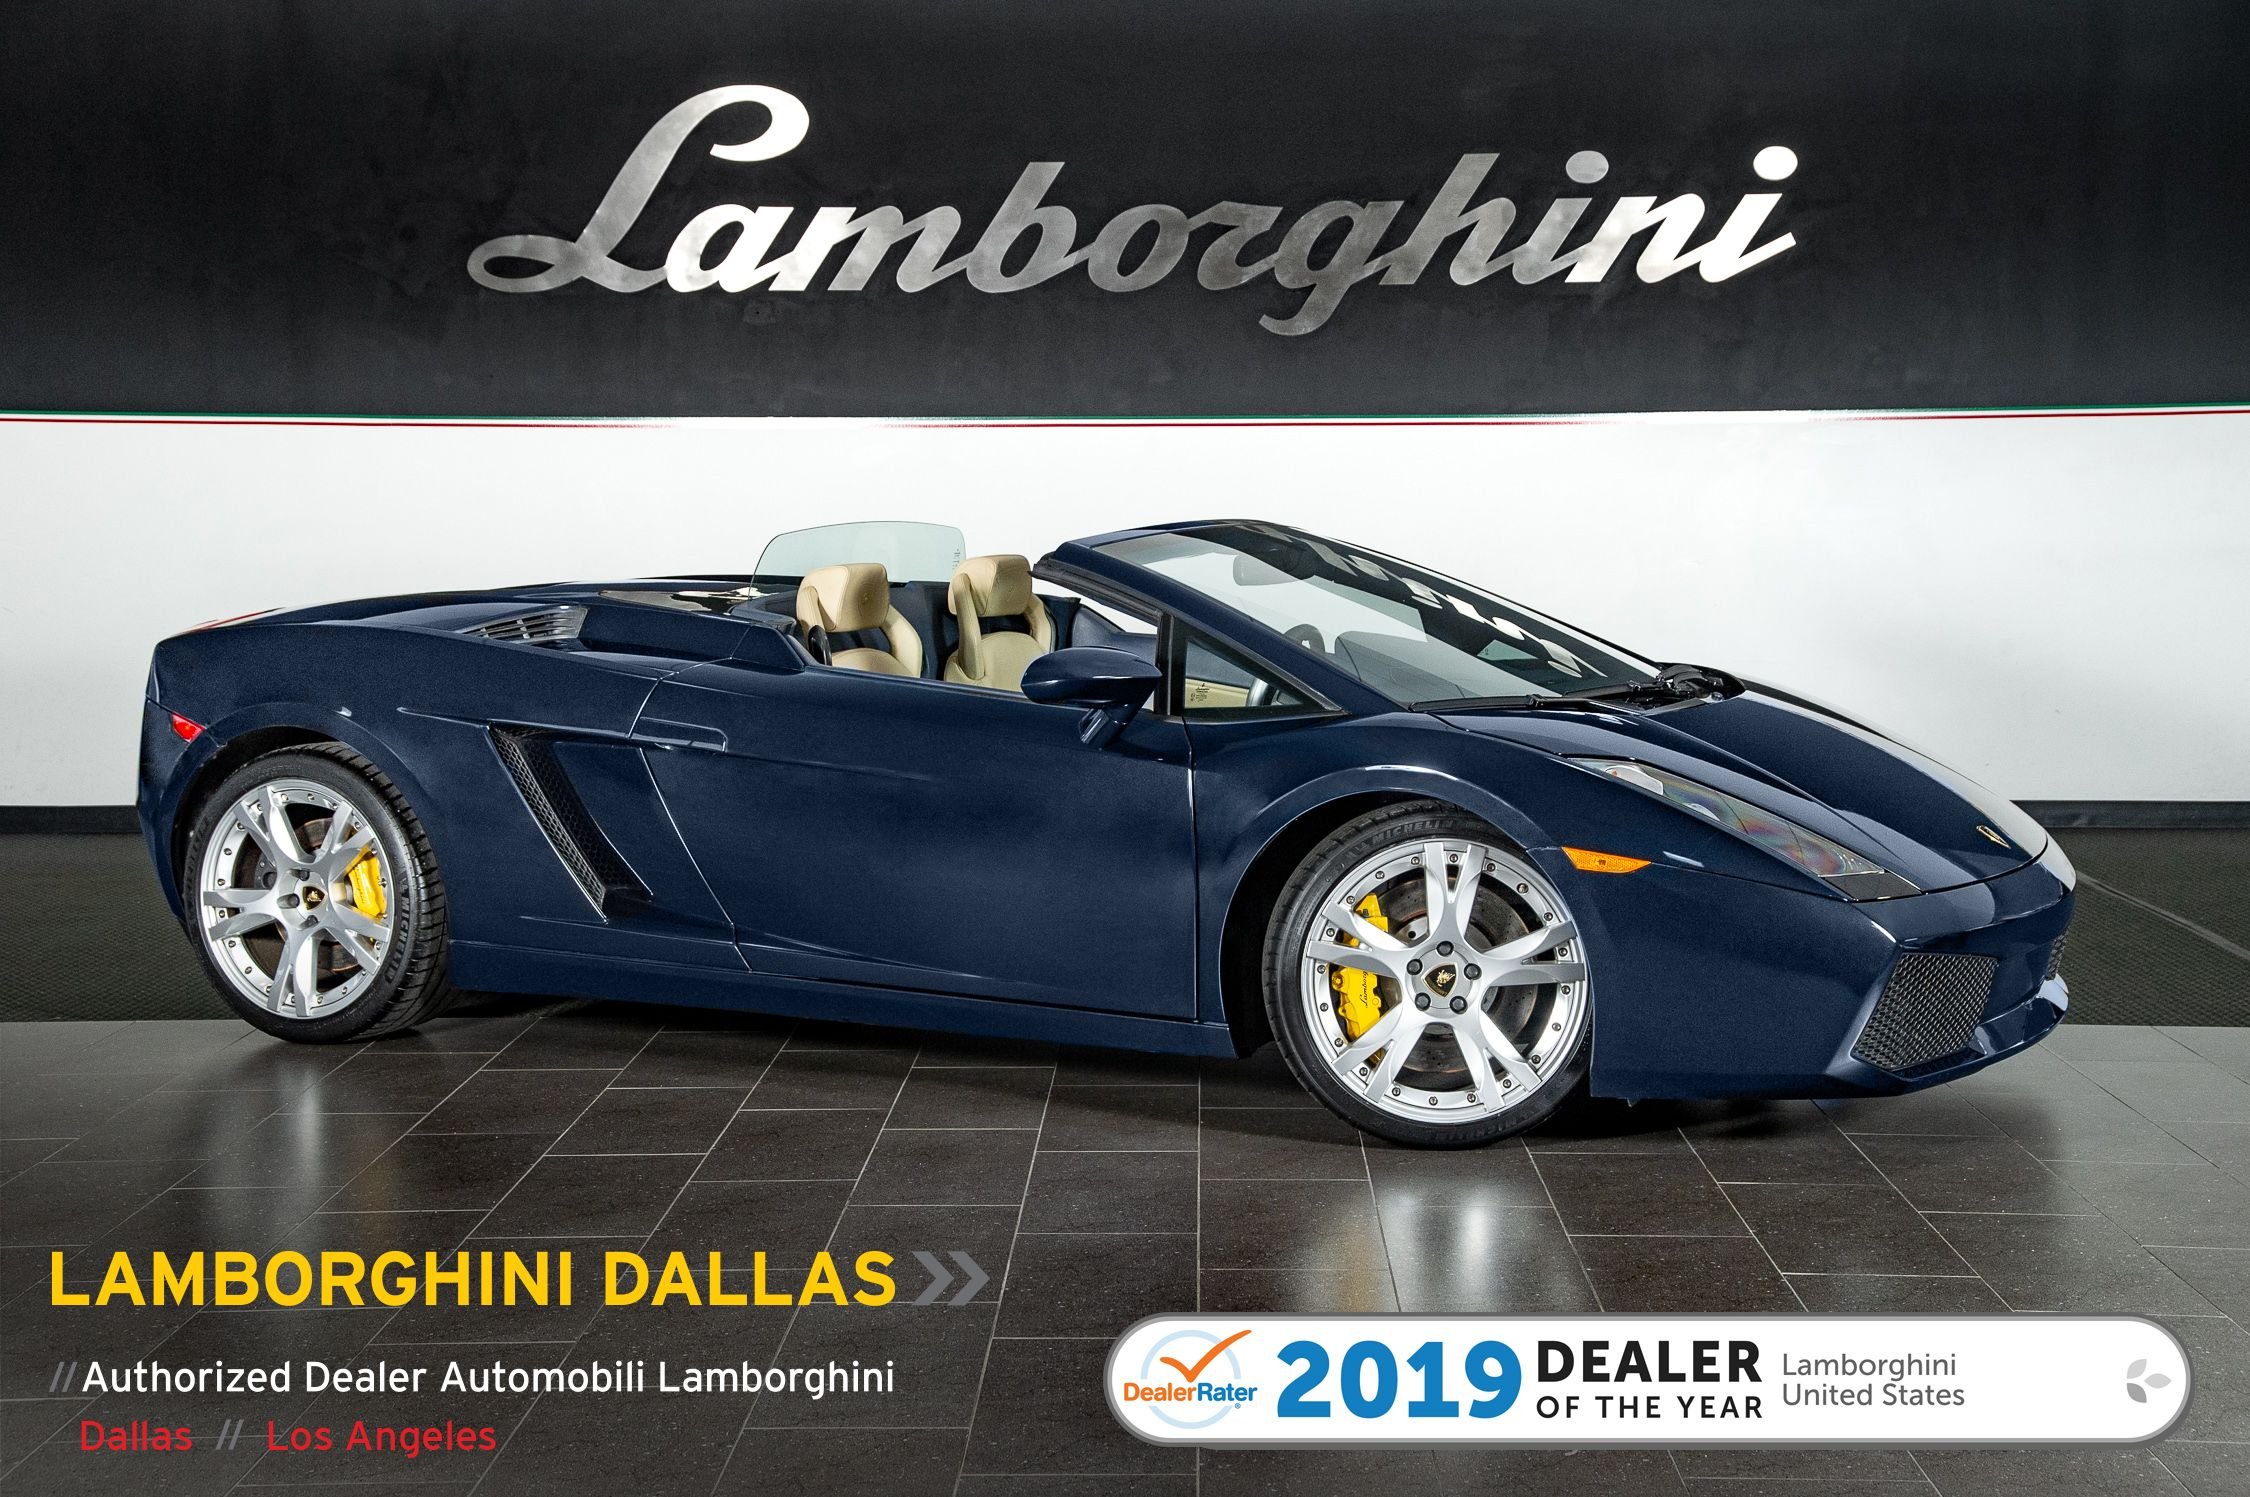 Used 2007 Lamborghini Gallardo For Sale Richardson Tx Stock Lt1287 Vin Zhwgu22n37la05073